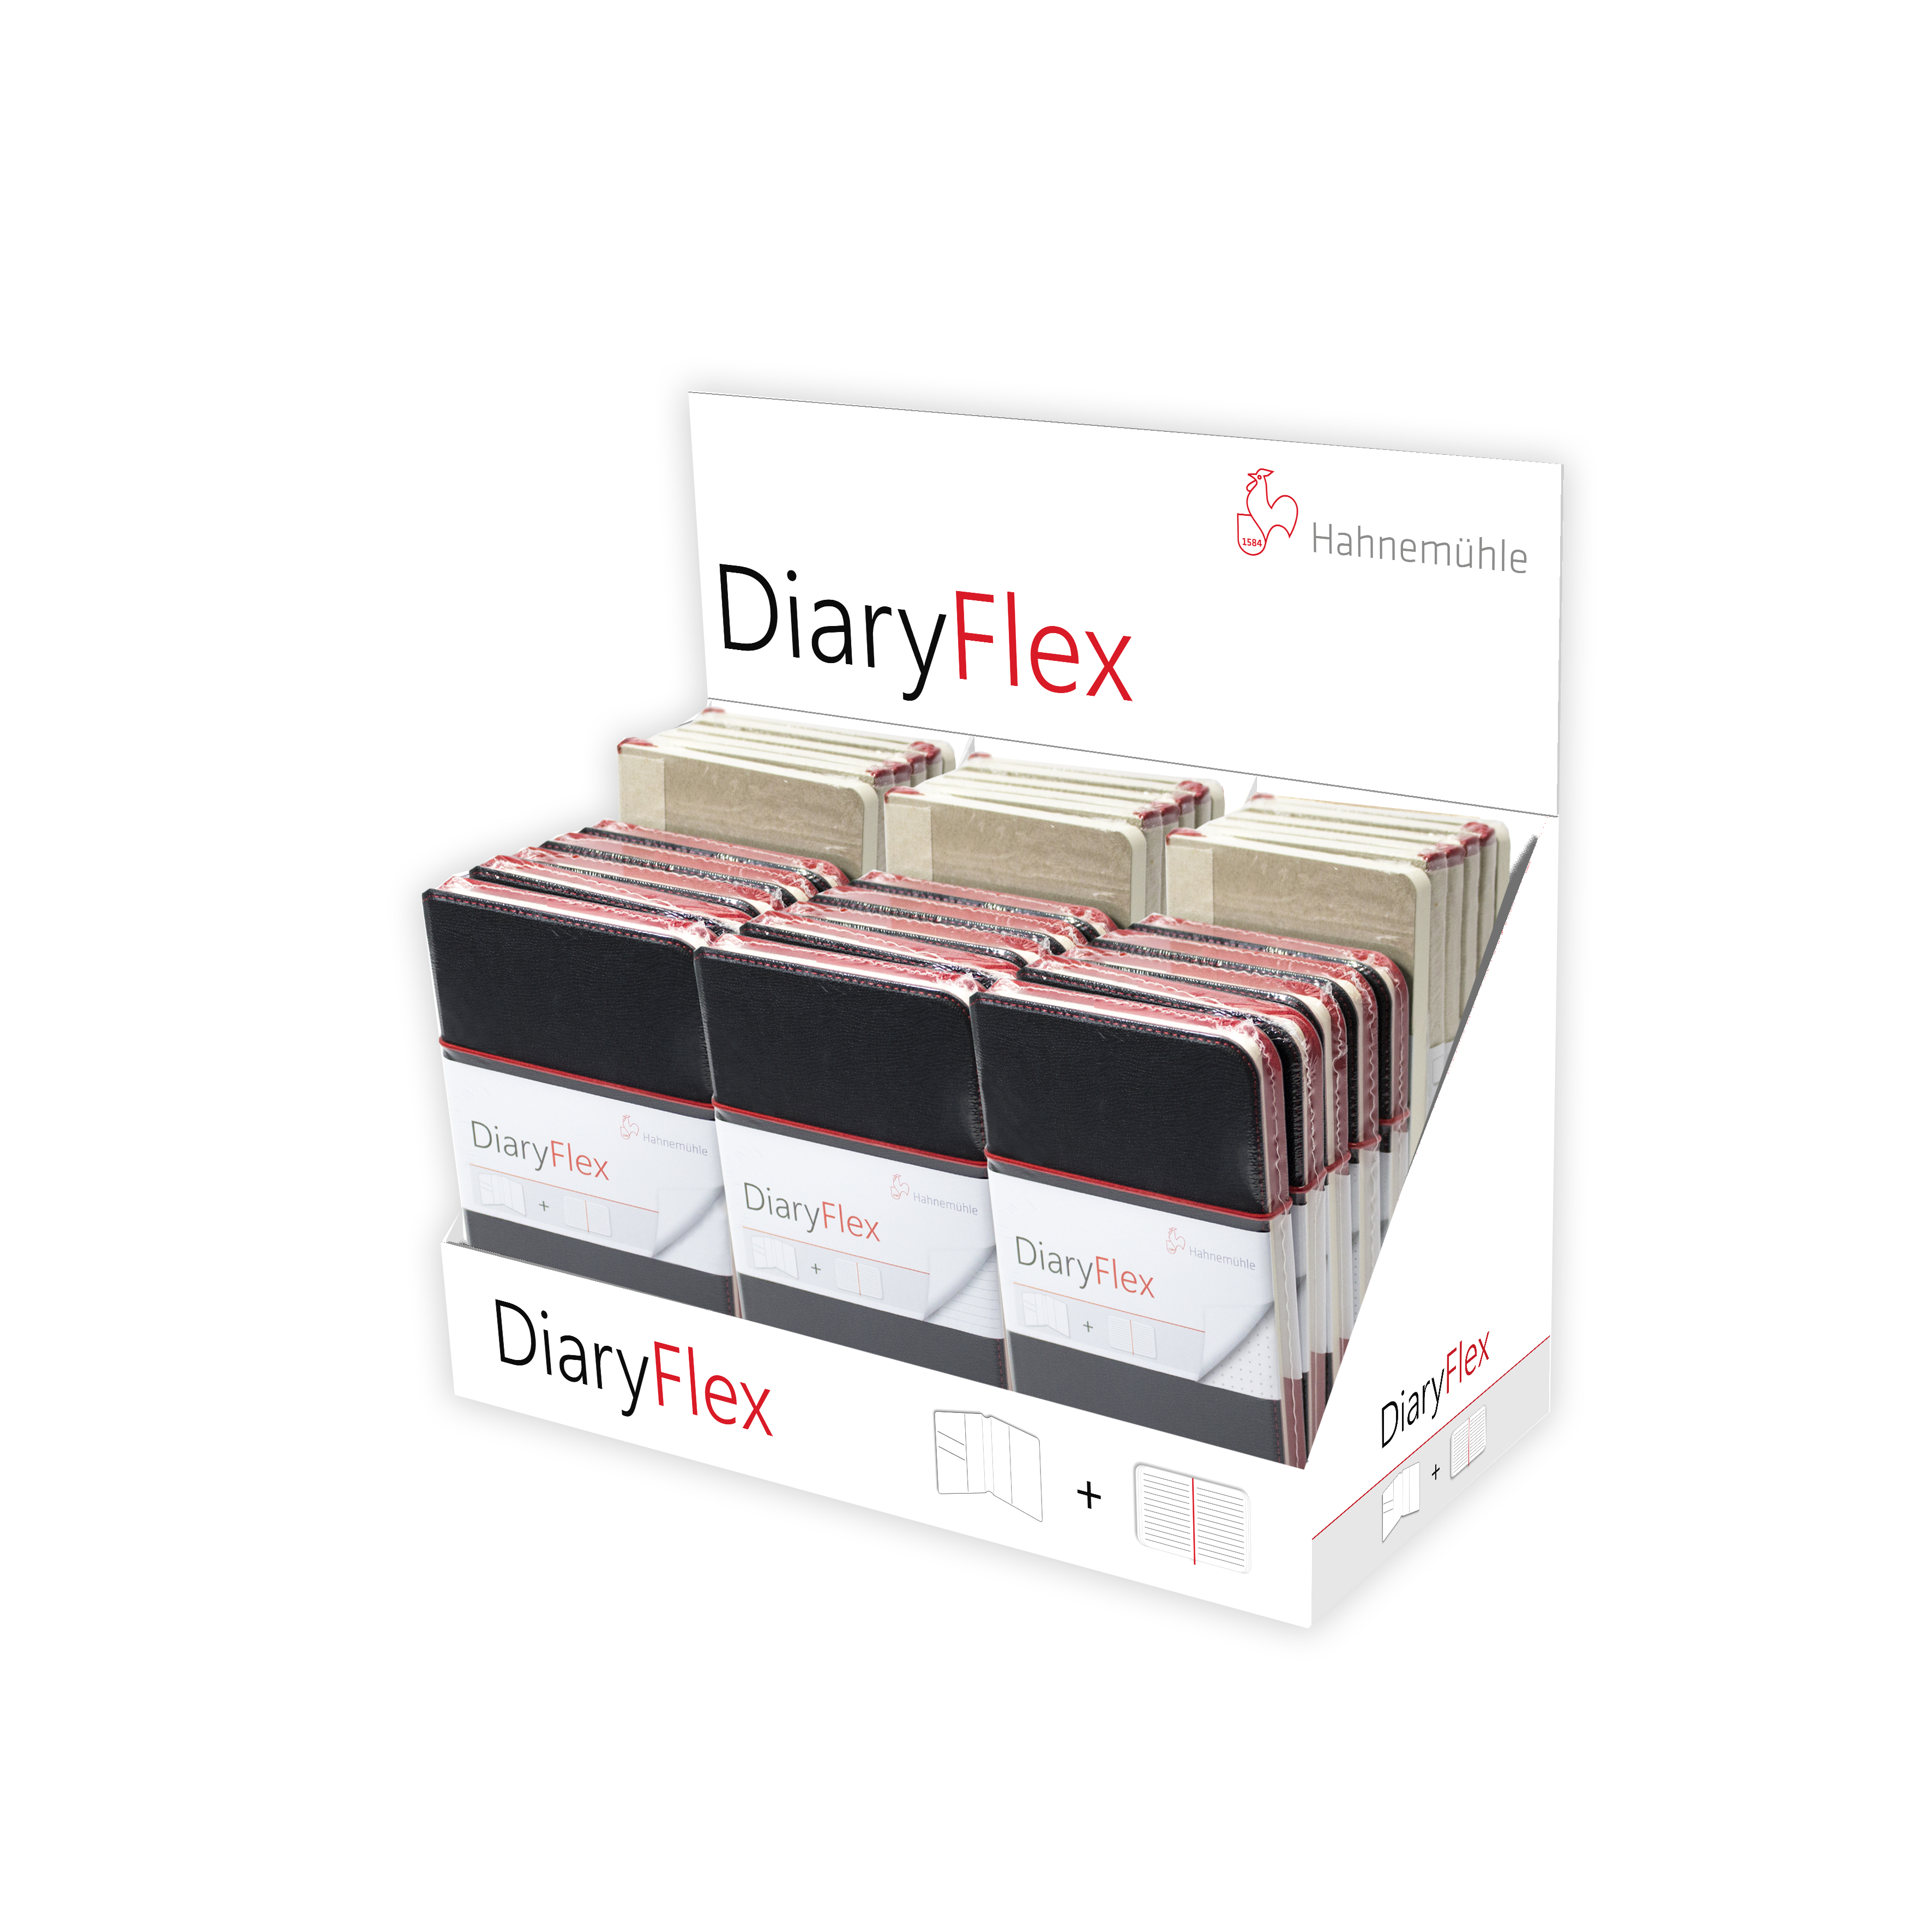 DiaryFlex